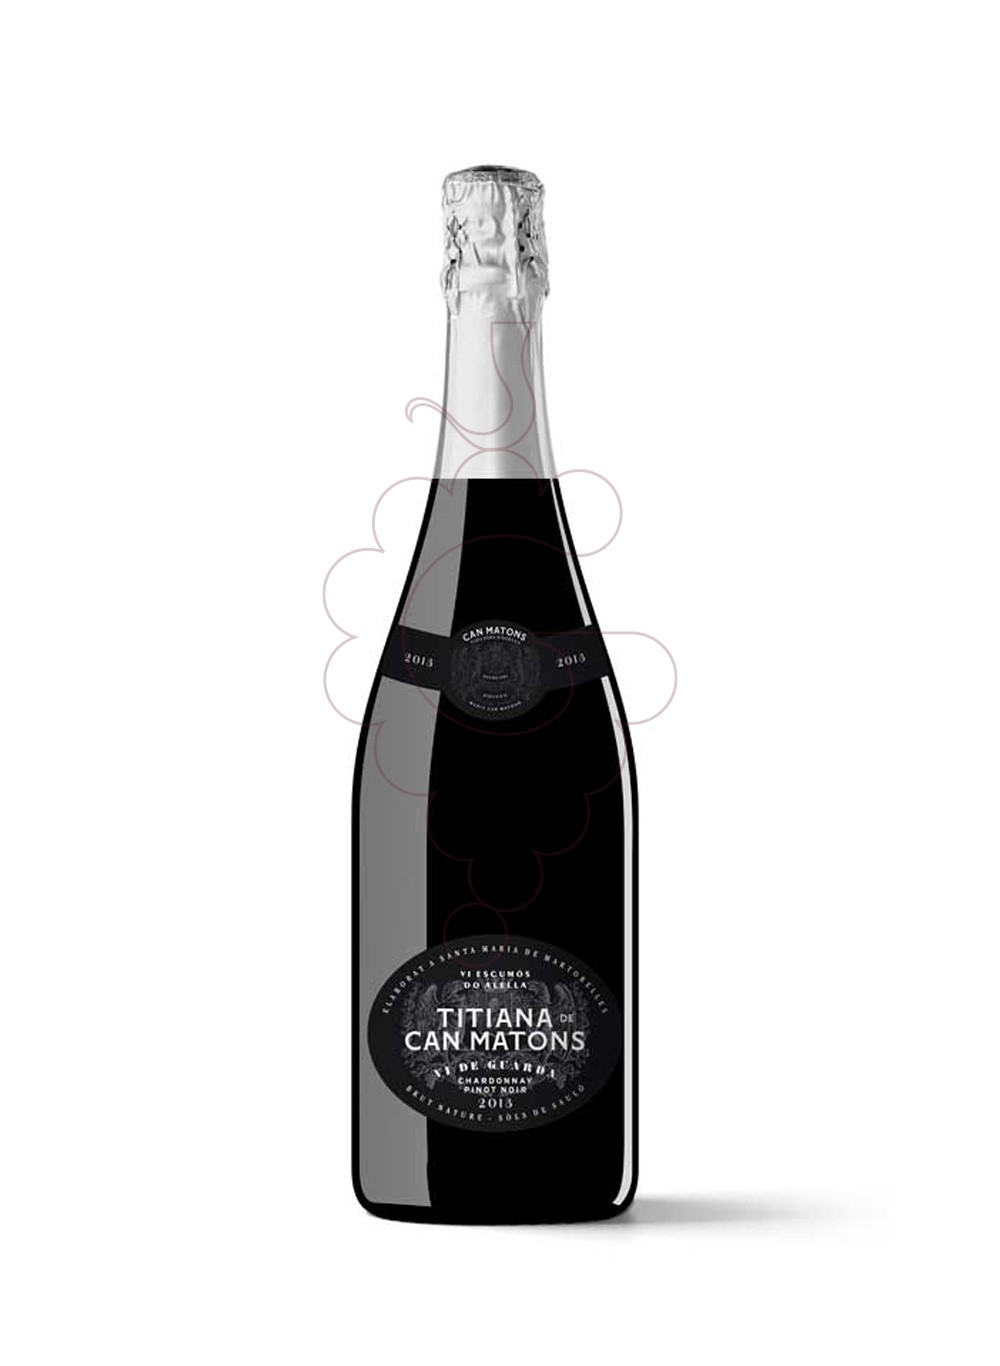 Photo Titiana de Can Matons Chardonnay sparkling wine